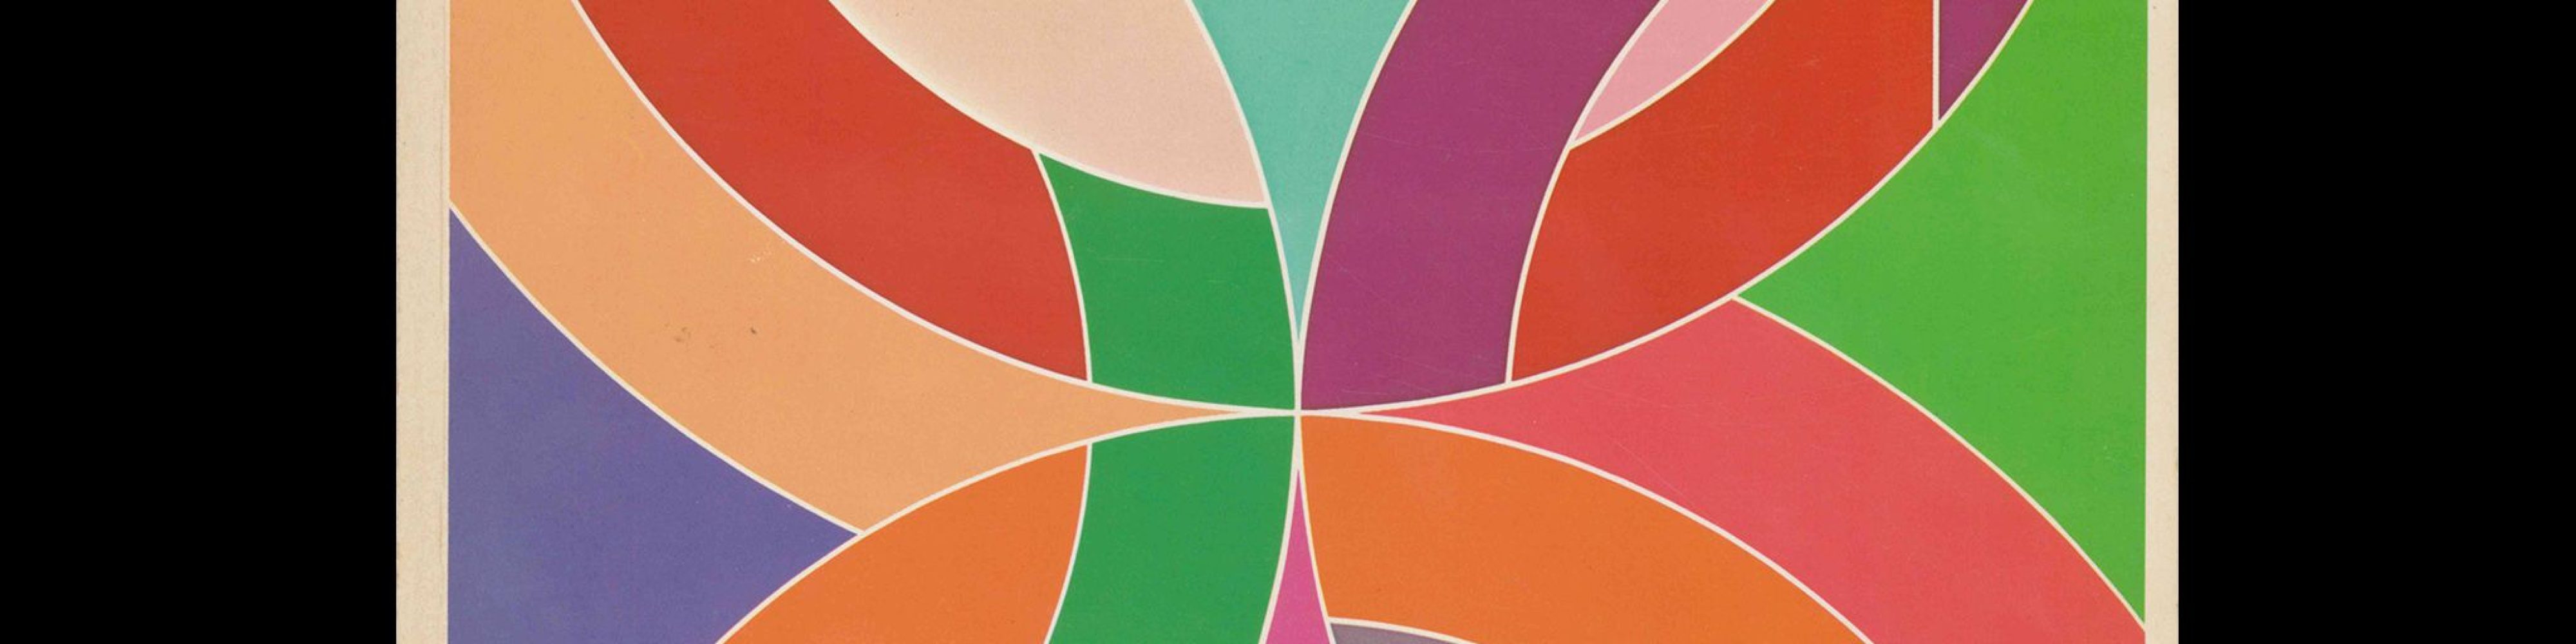 Frank Stella, Museum of Modern Art, 1970